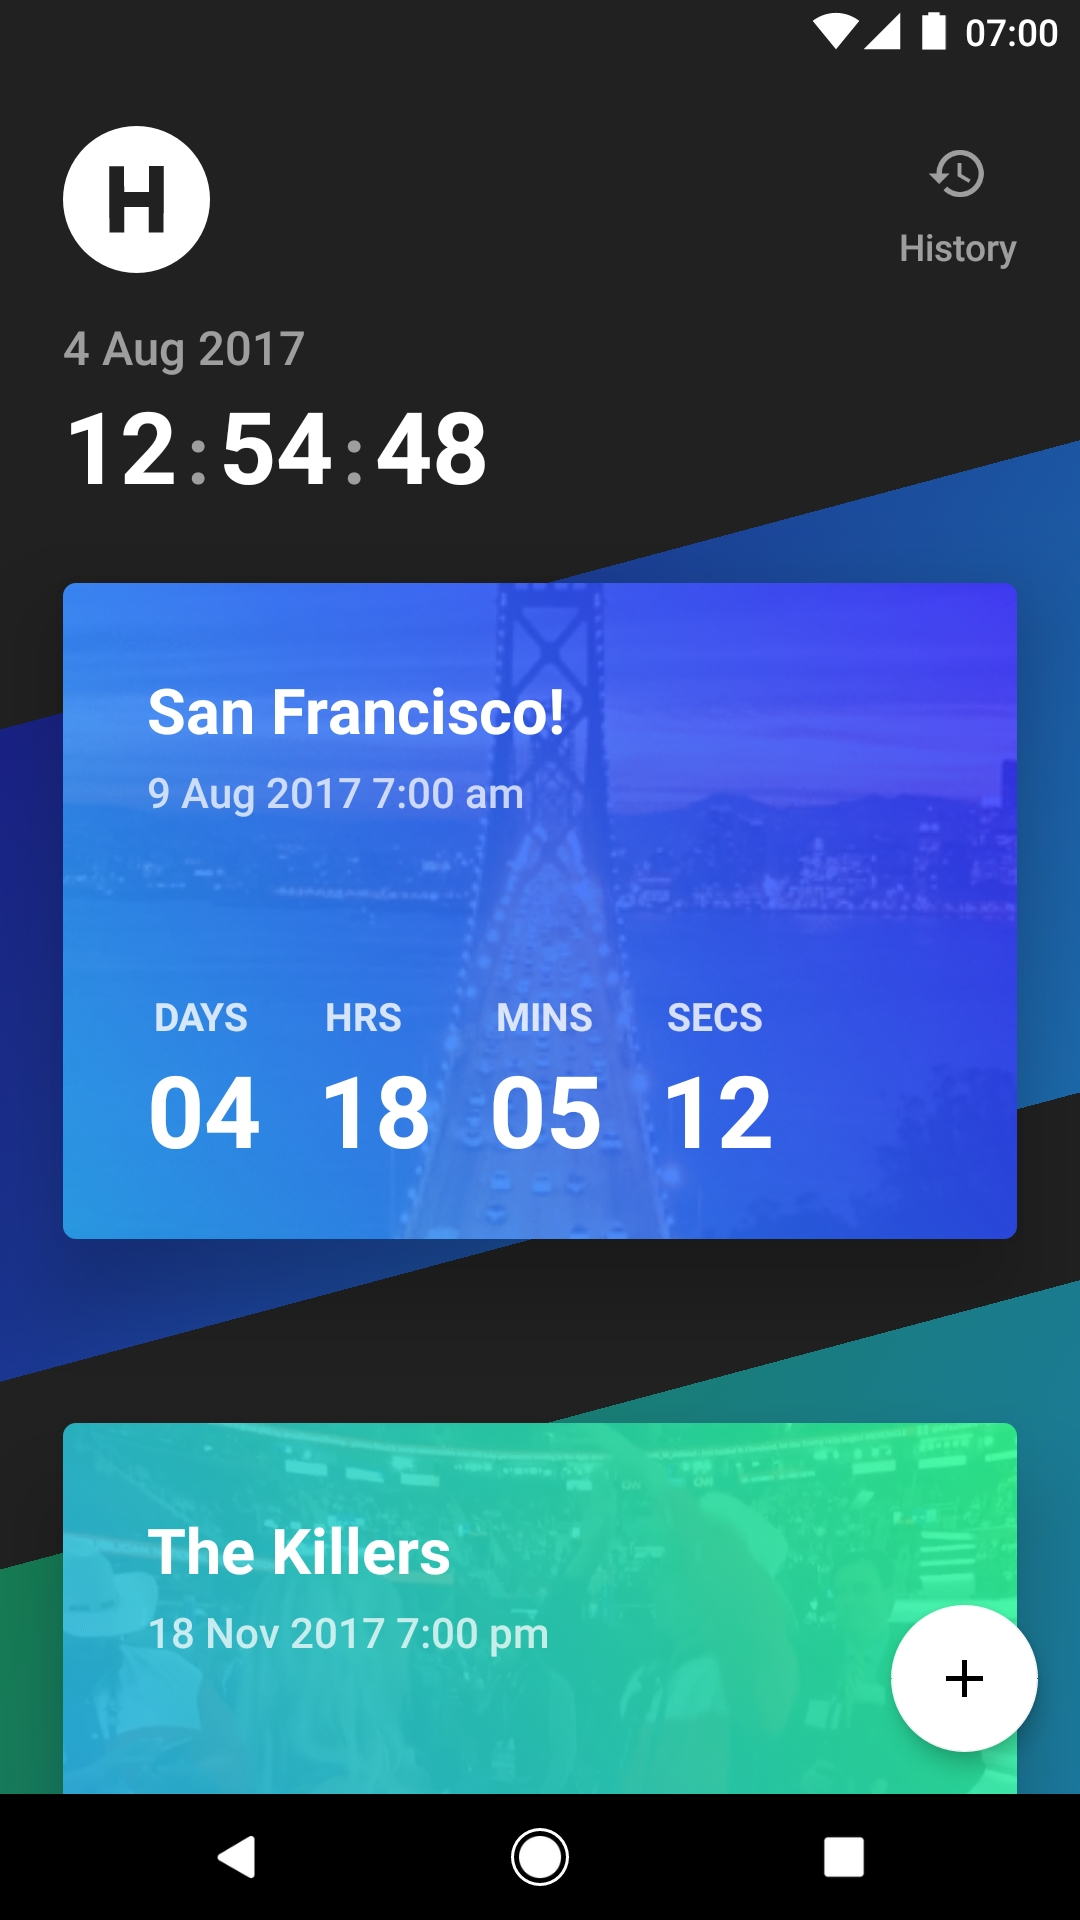 Countdown Calendar Widget Android | Free Calendar Template throughout Calendar Widget Android Apk